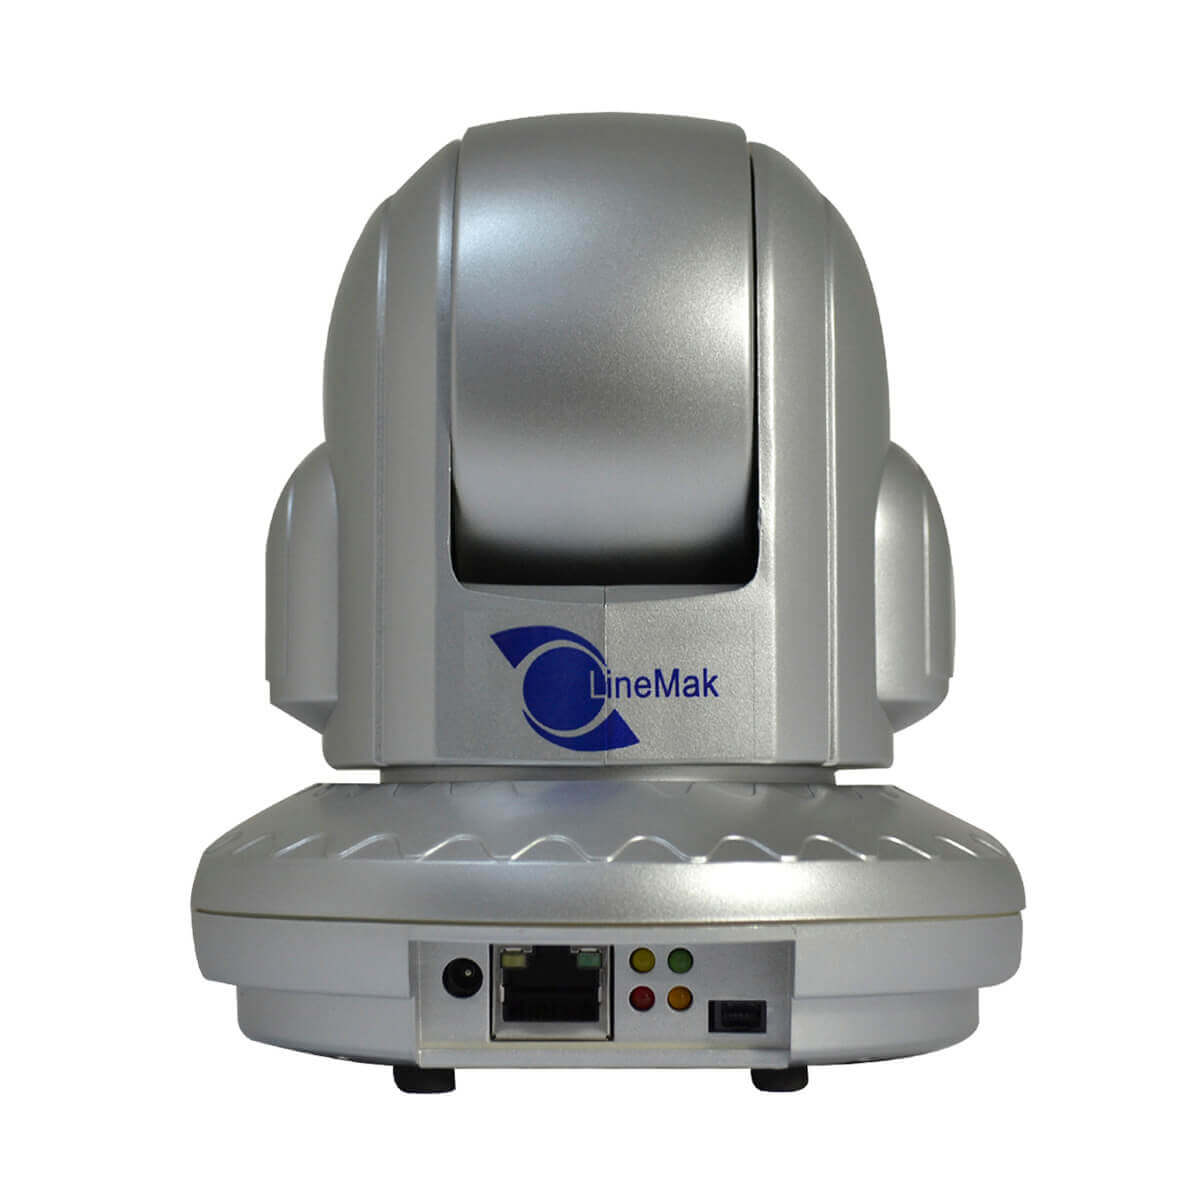 Camara IP motorizada de interiores, 1/3 CMOS 400TV, lente de 6mm, 12 LEDs